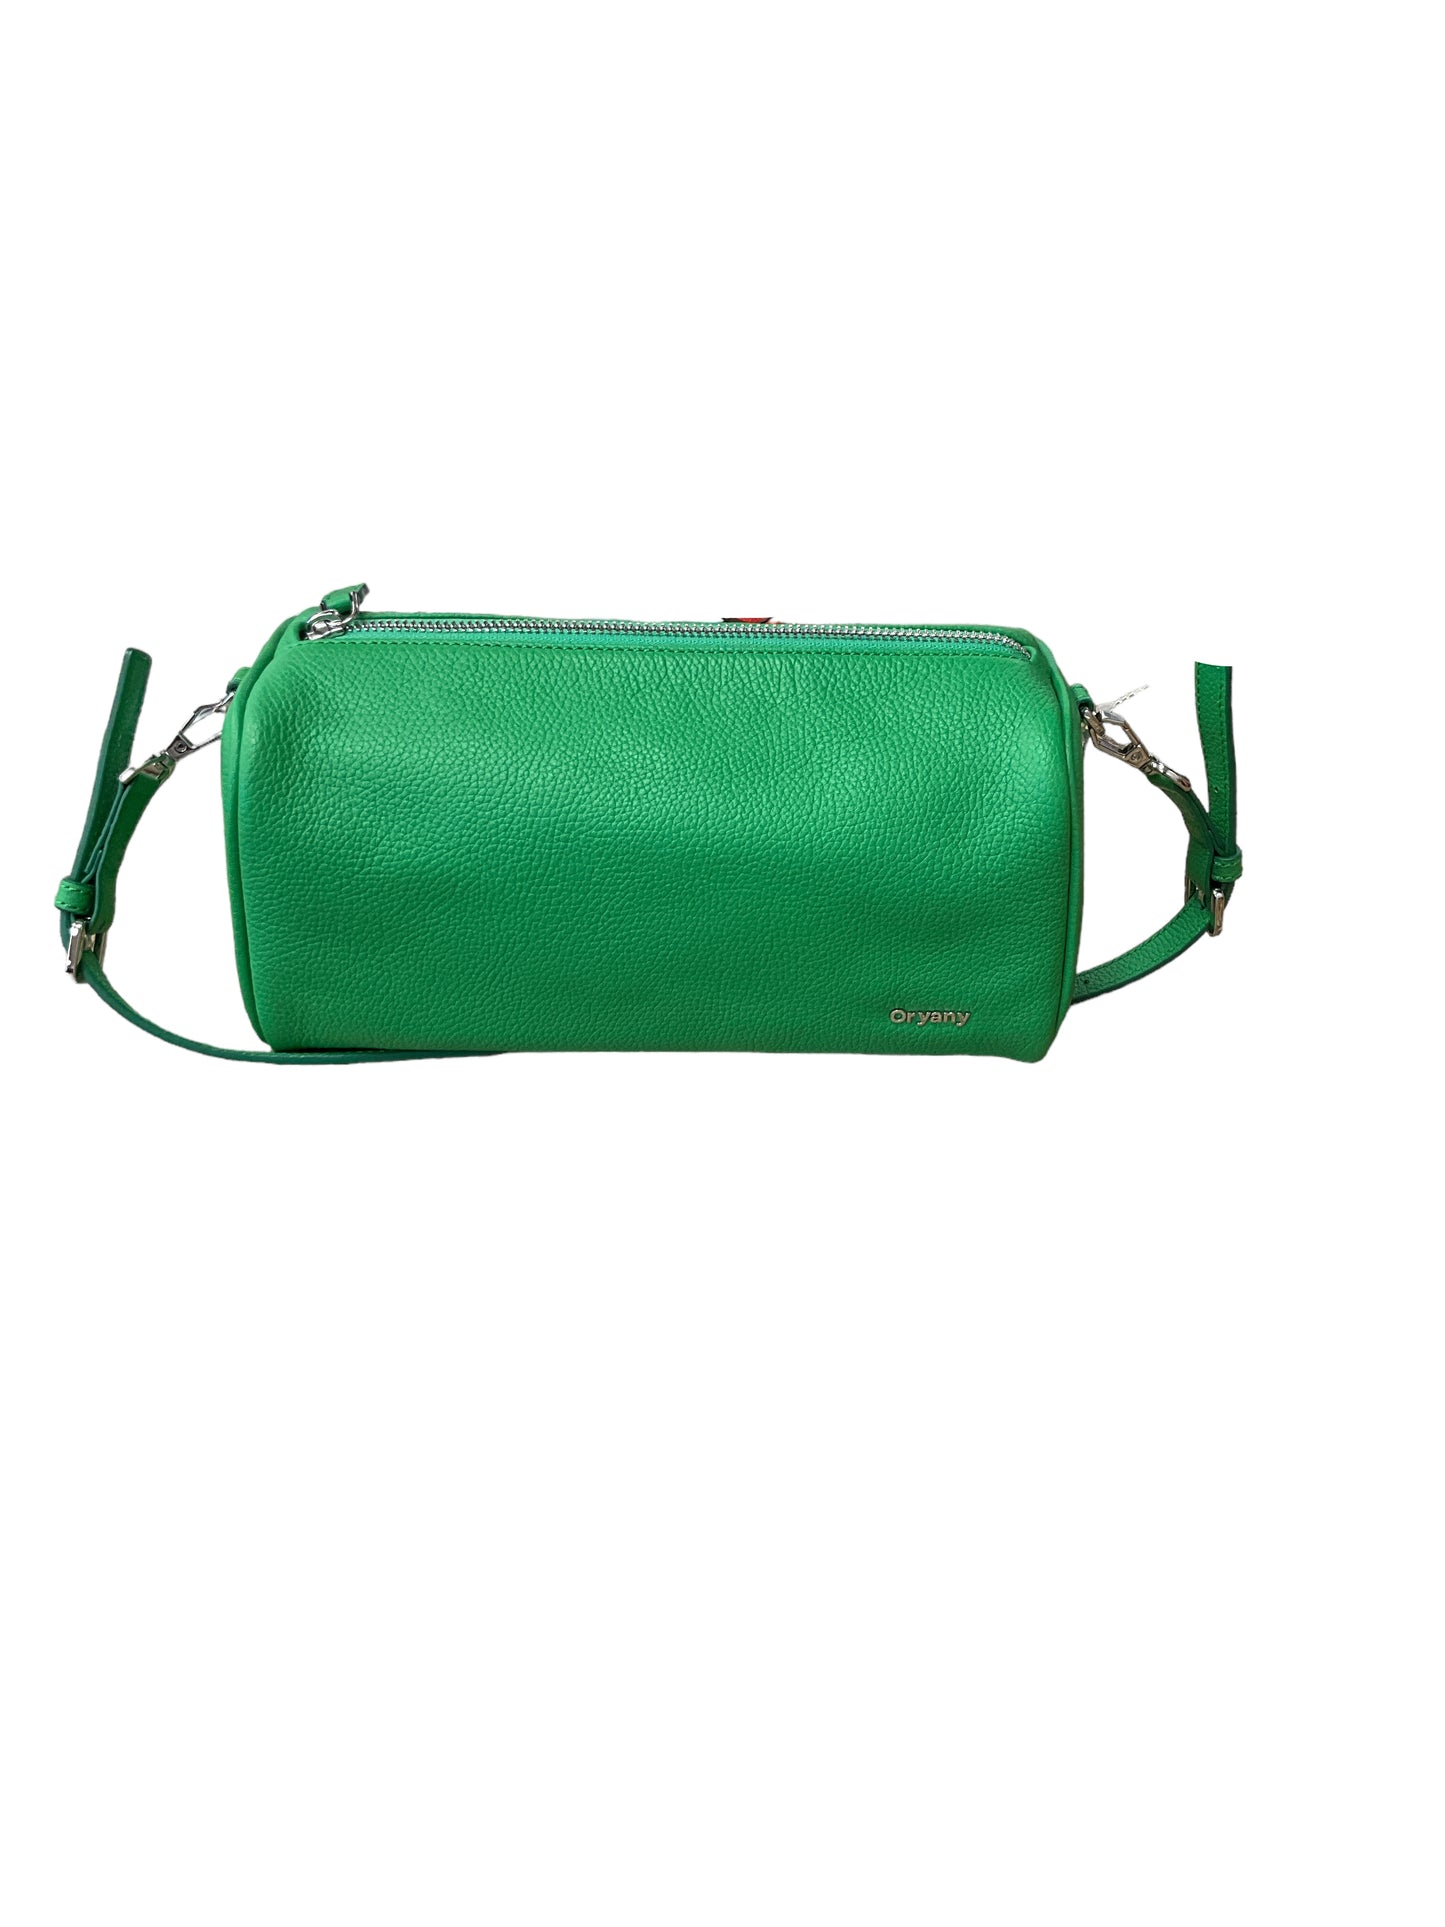 Handbag Leather By Oryany  Size: Small